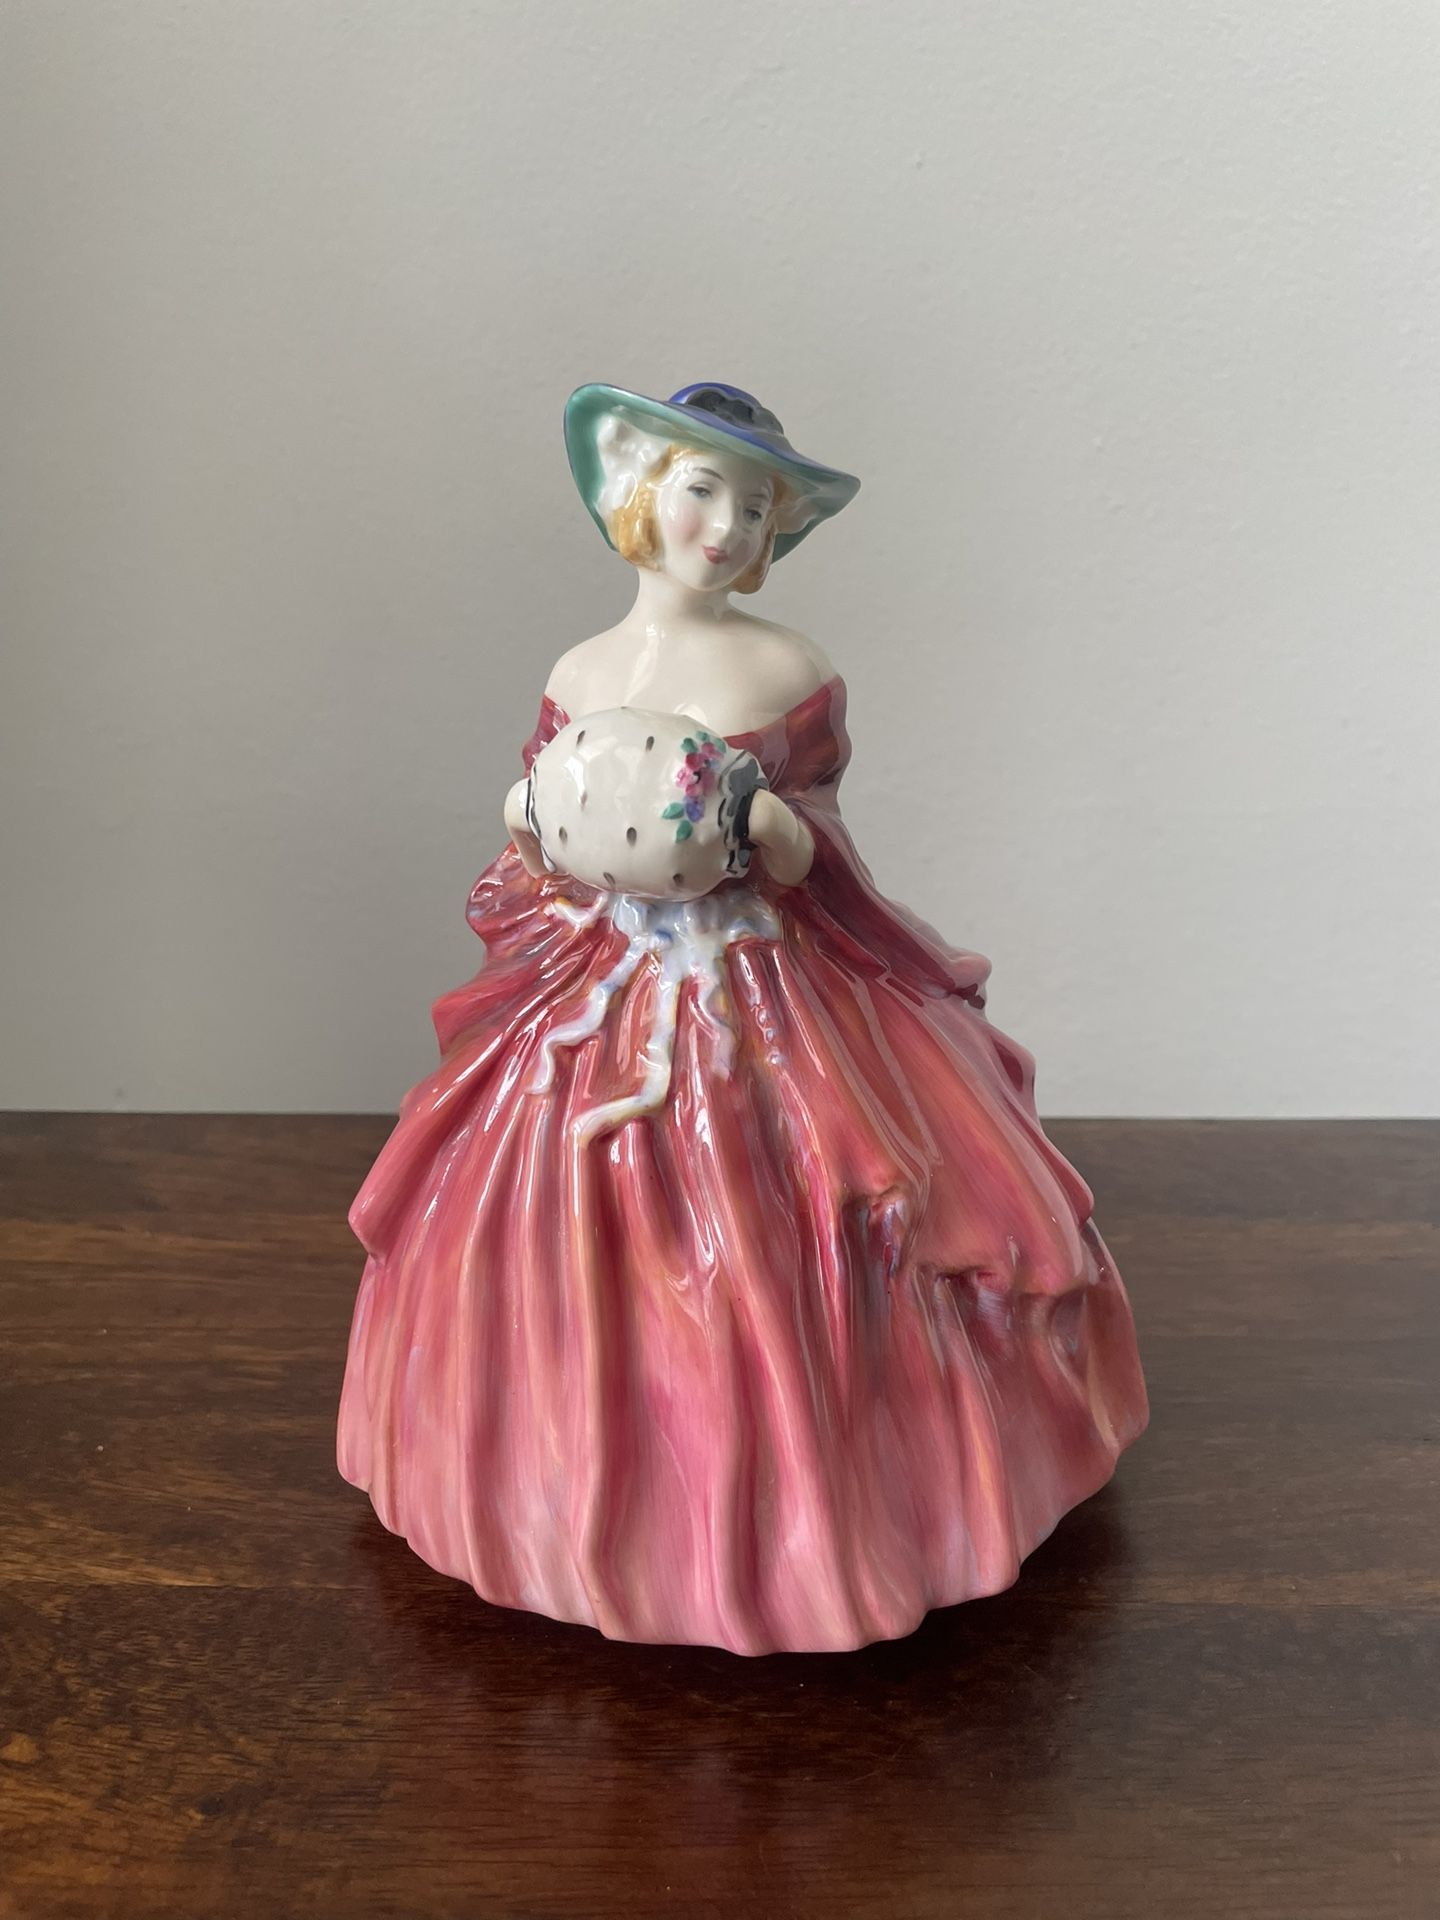 Royal Doulton Porcelain Figurine “Genevieve” 1962